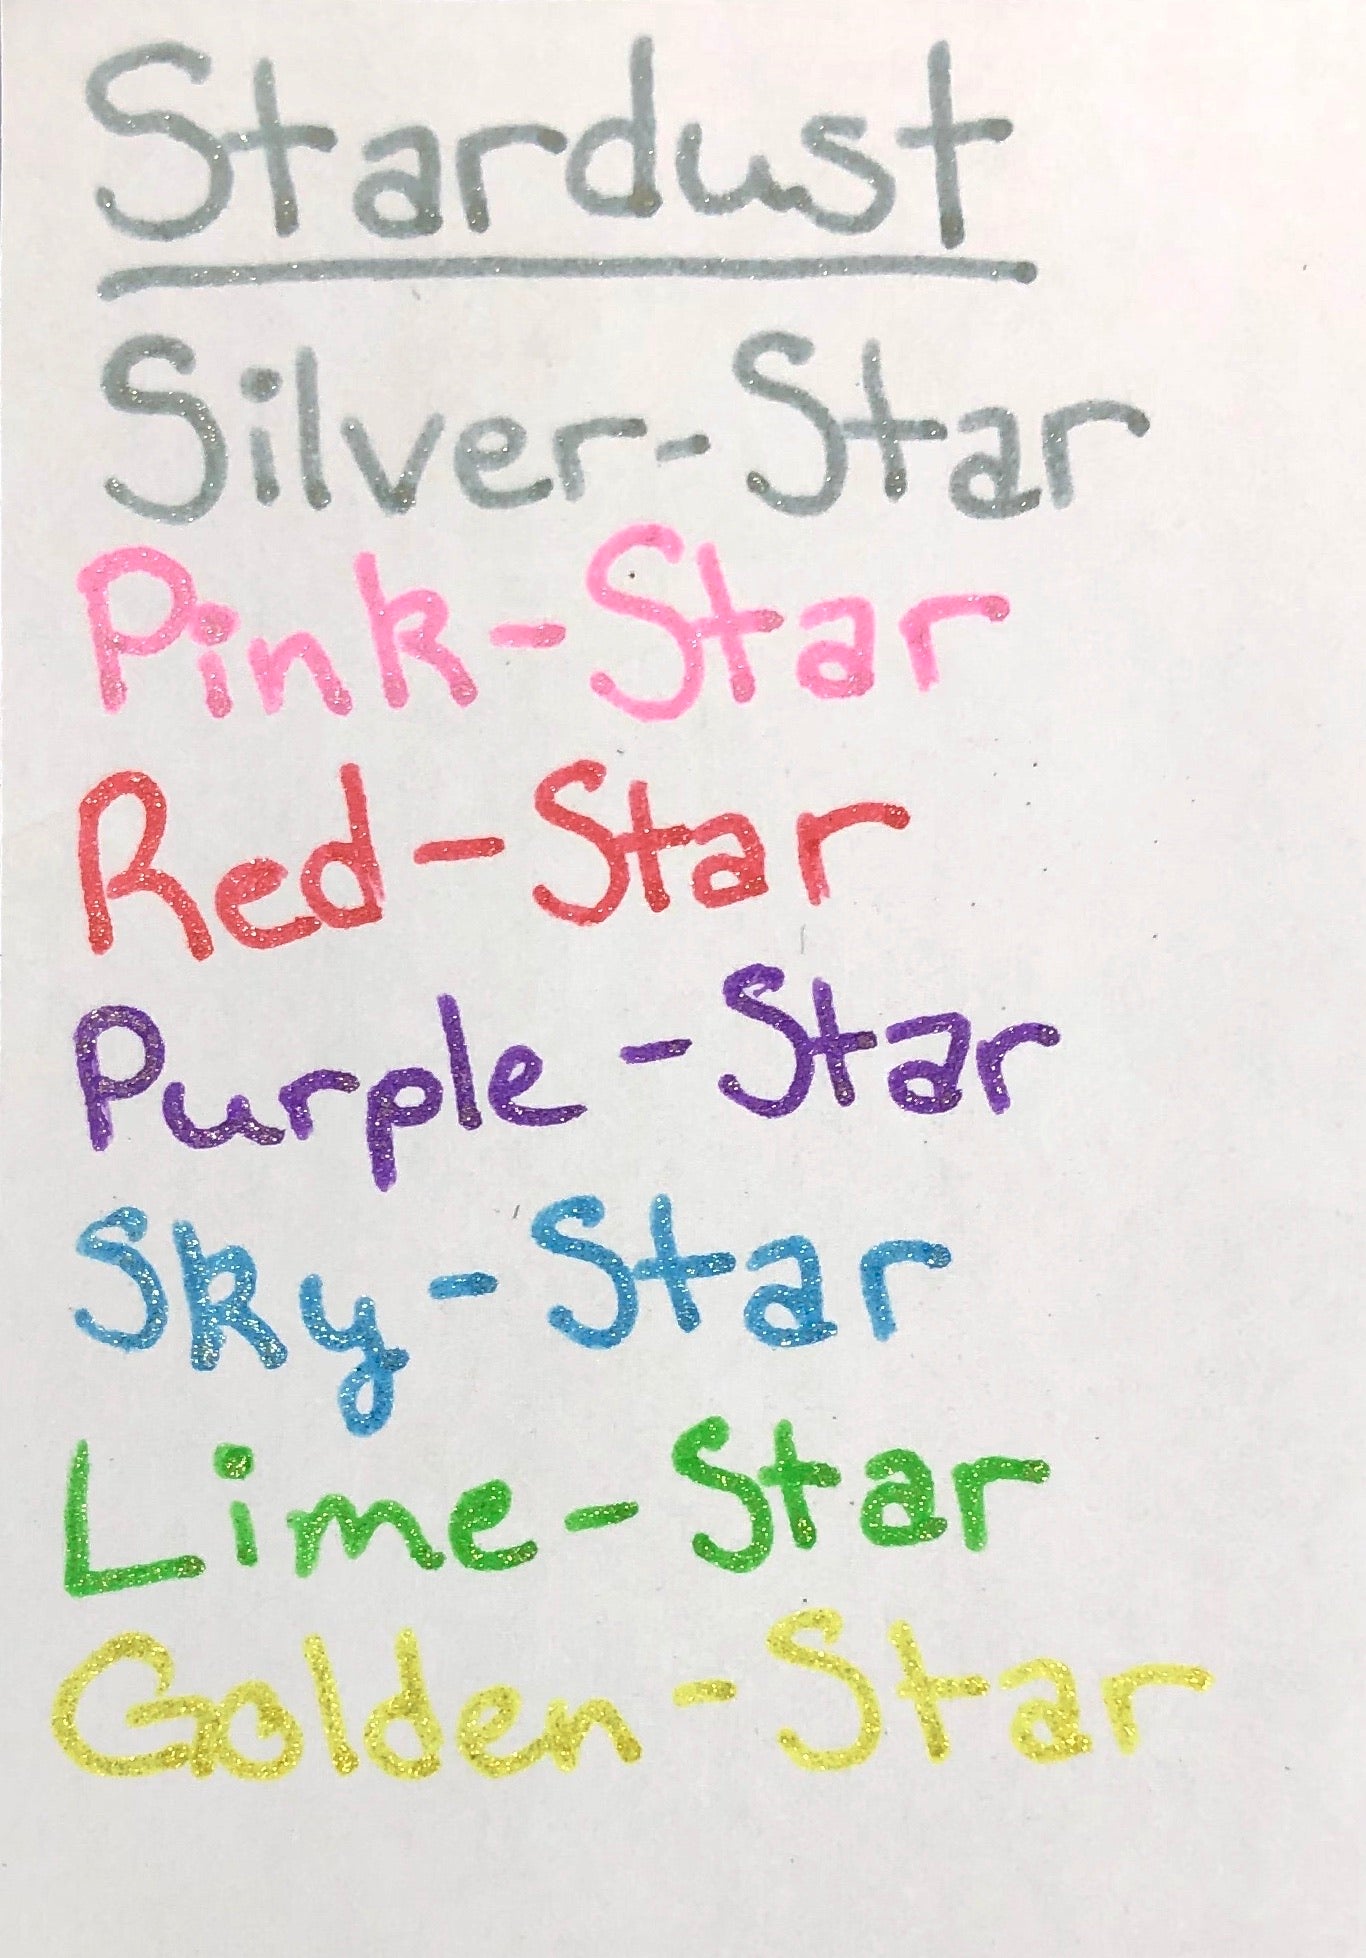 Gelly Roll Stardust Pen (Lime Star) – Doodlebugs